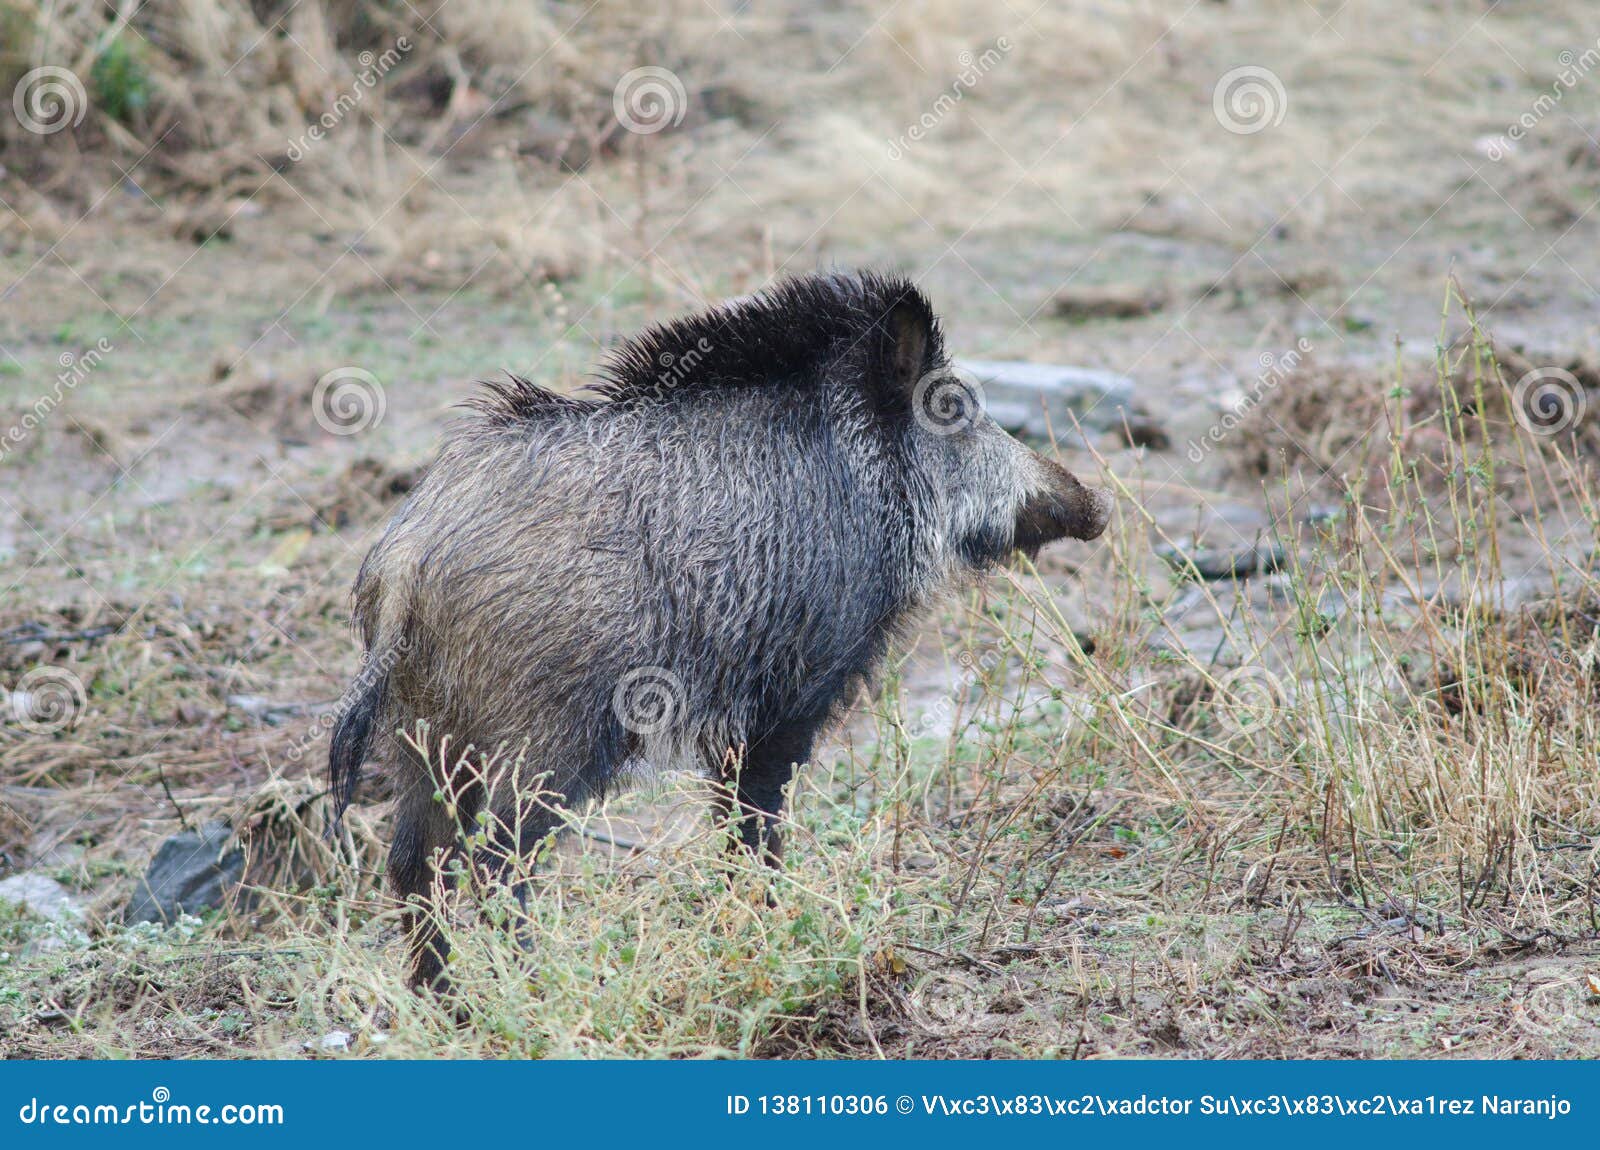 wild boar sus scrofa in the huerto del almez.